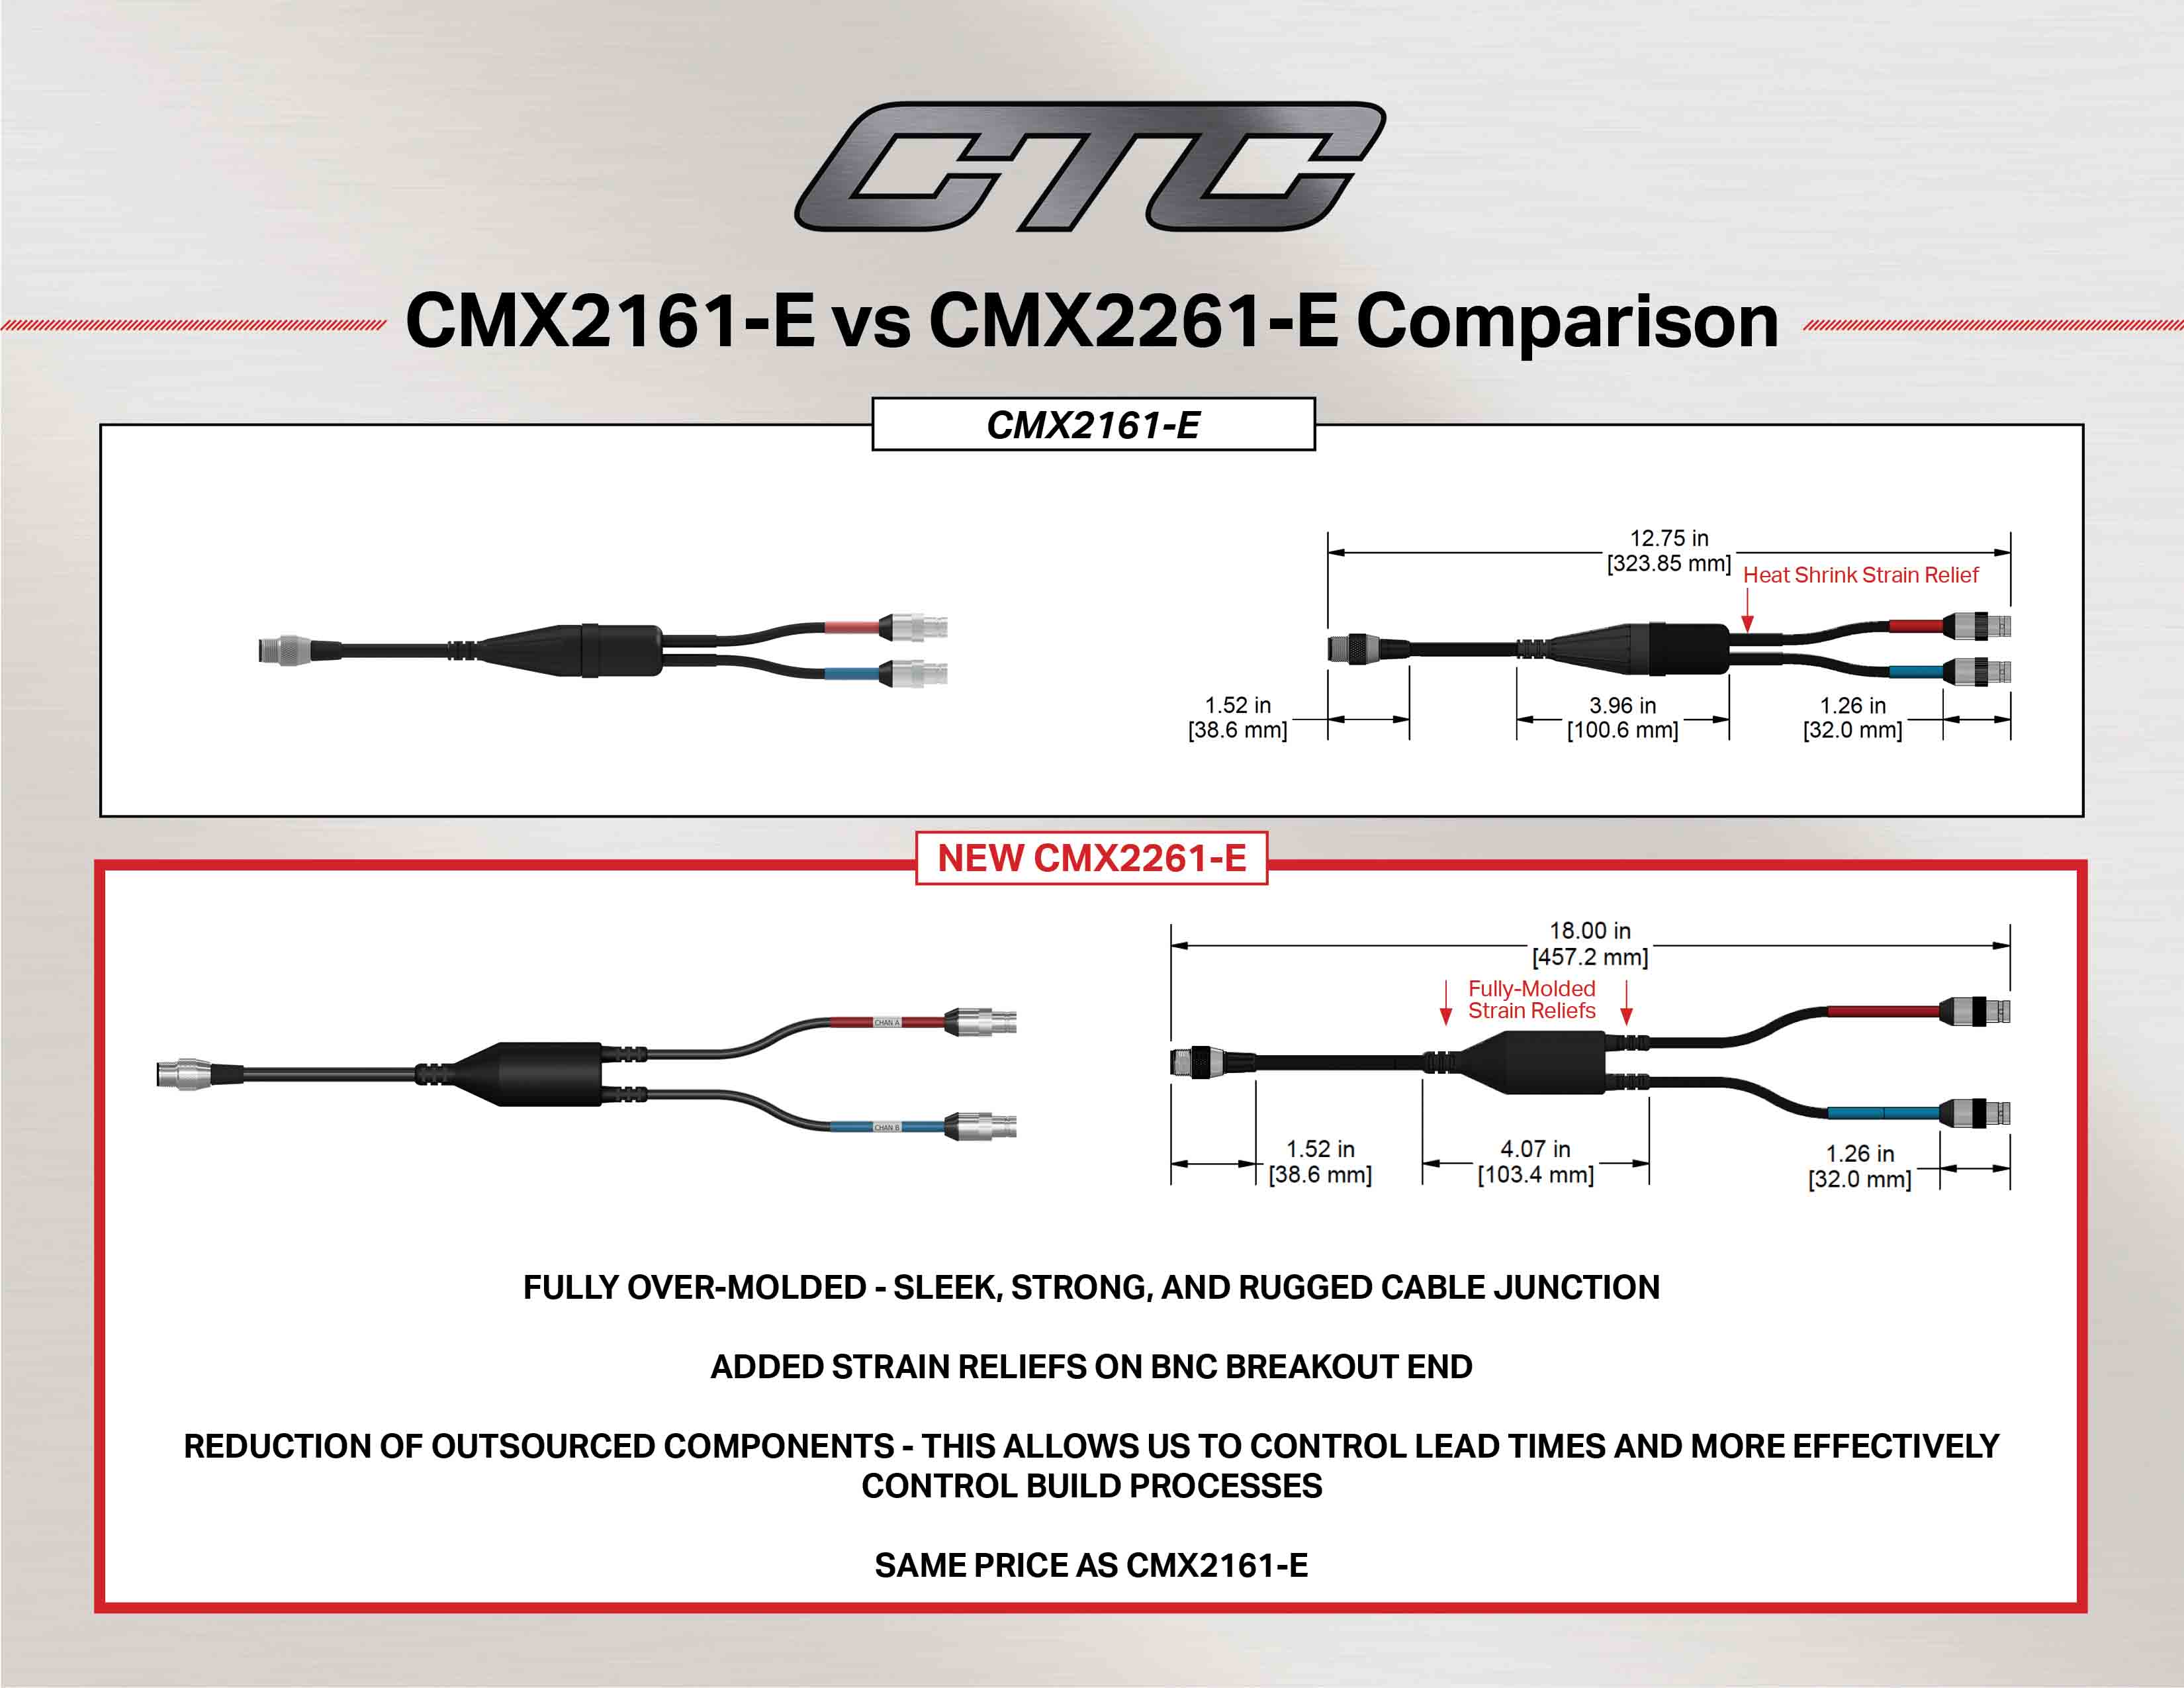 CMX2161-E vs CMX2261-E cable comparison diagram and measurements